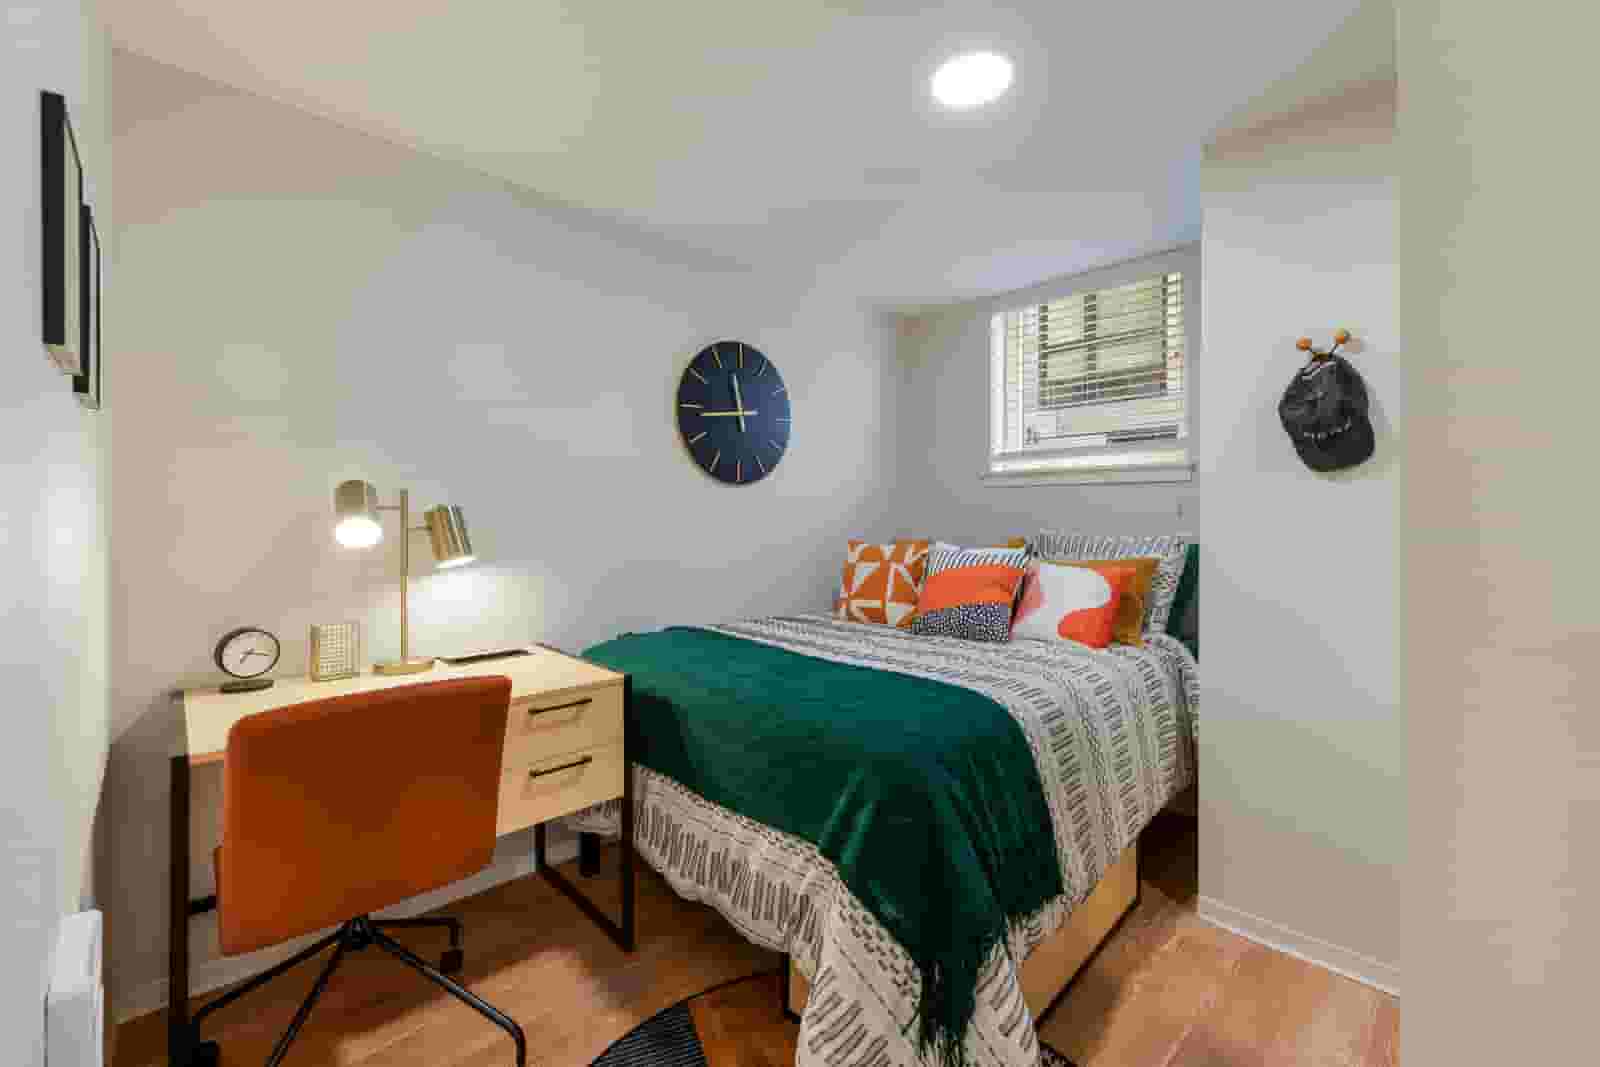 Comfy, modern bedroom furnishings